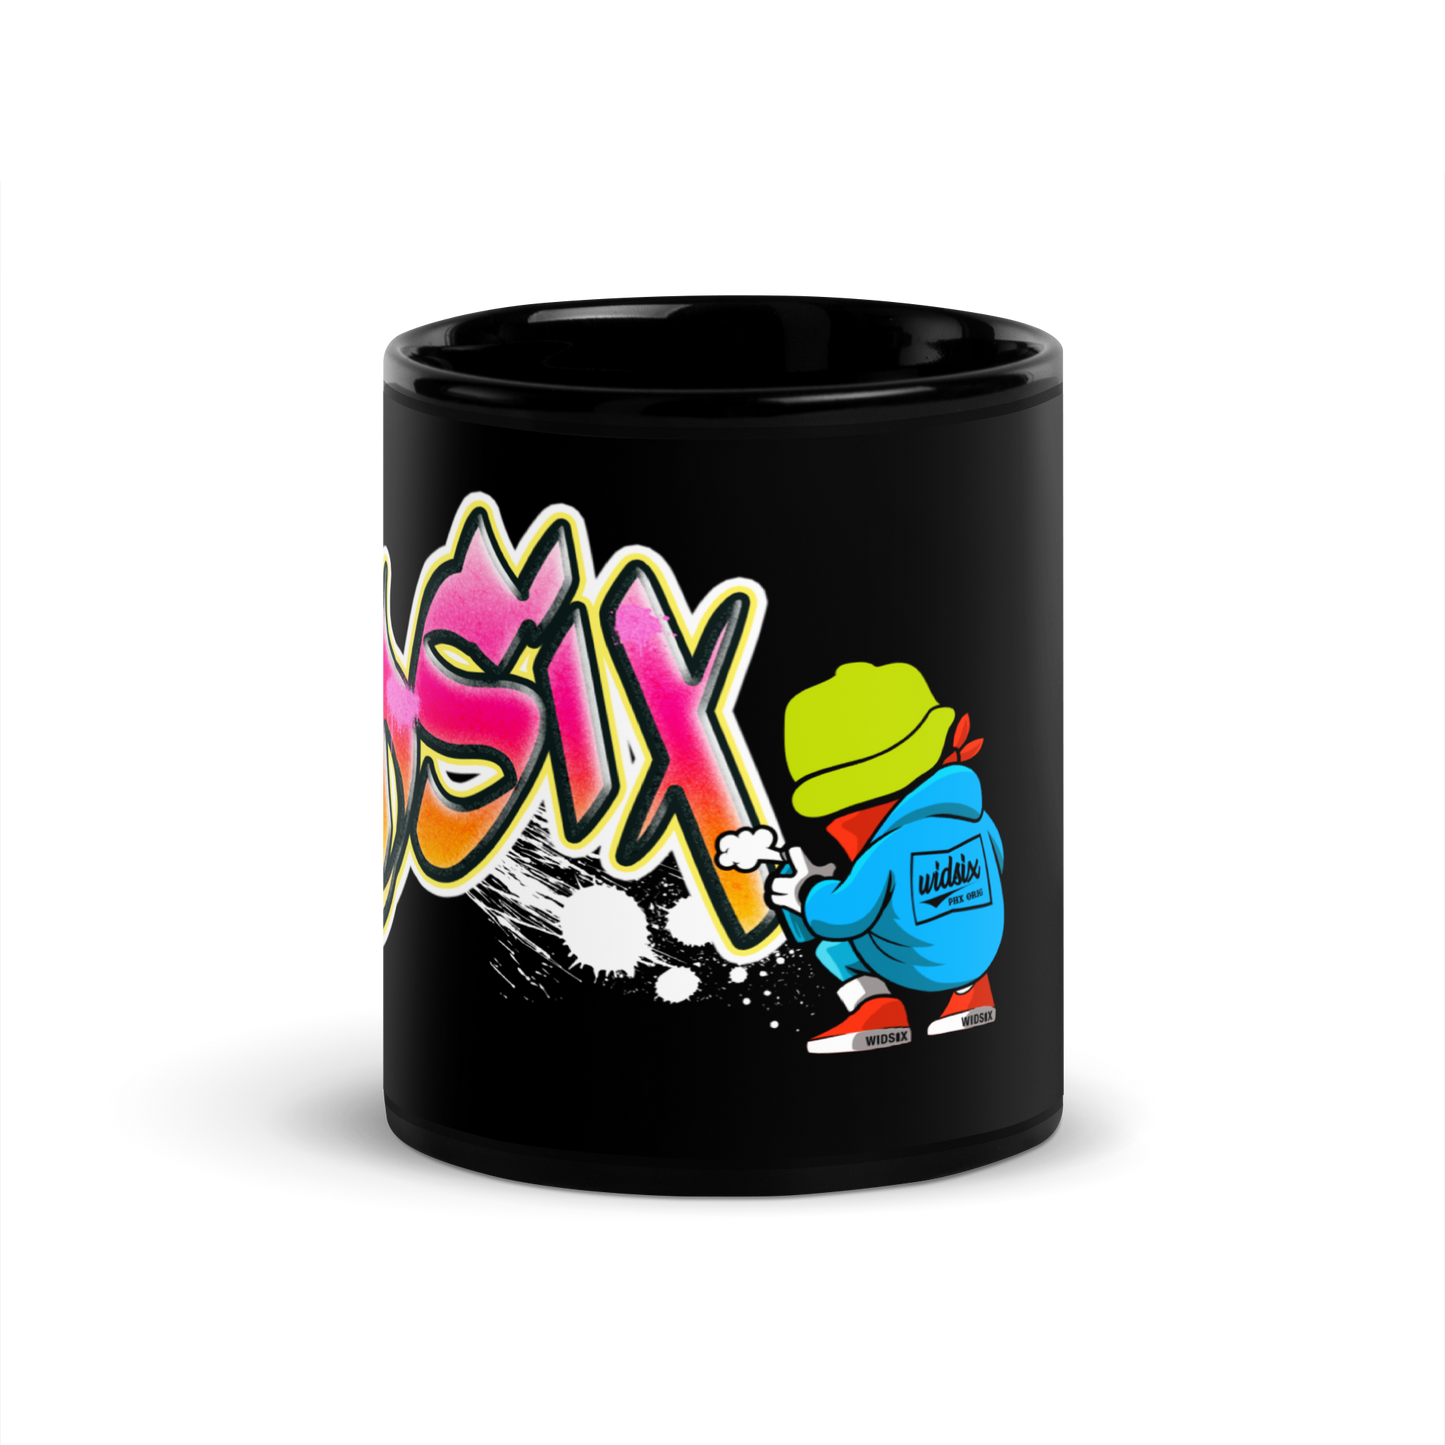 WIDSIX Grab a Can Black Glossy Mug